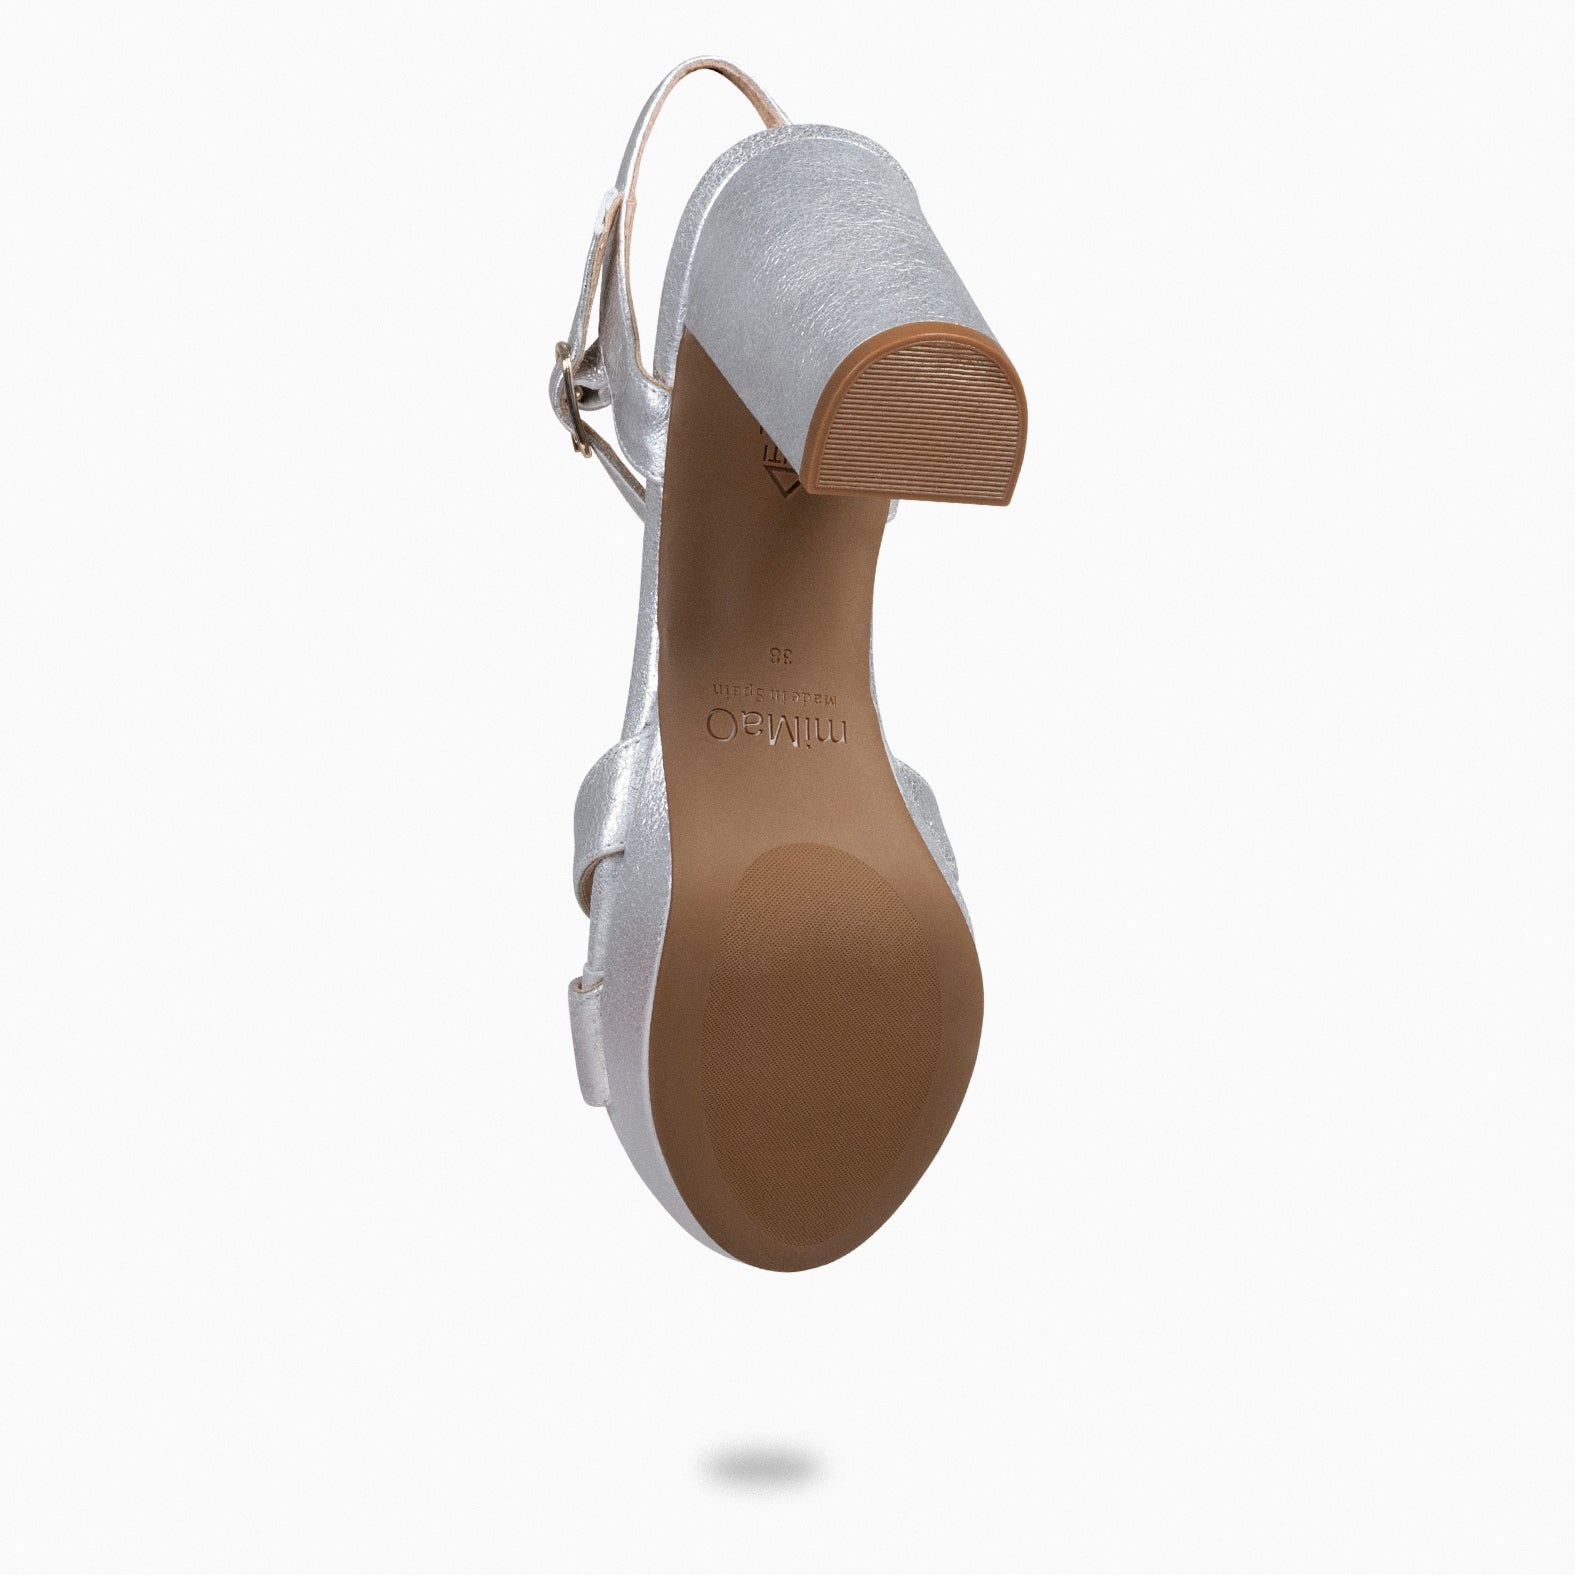 PARIS – SILVER high heel sandal with platform